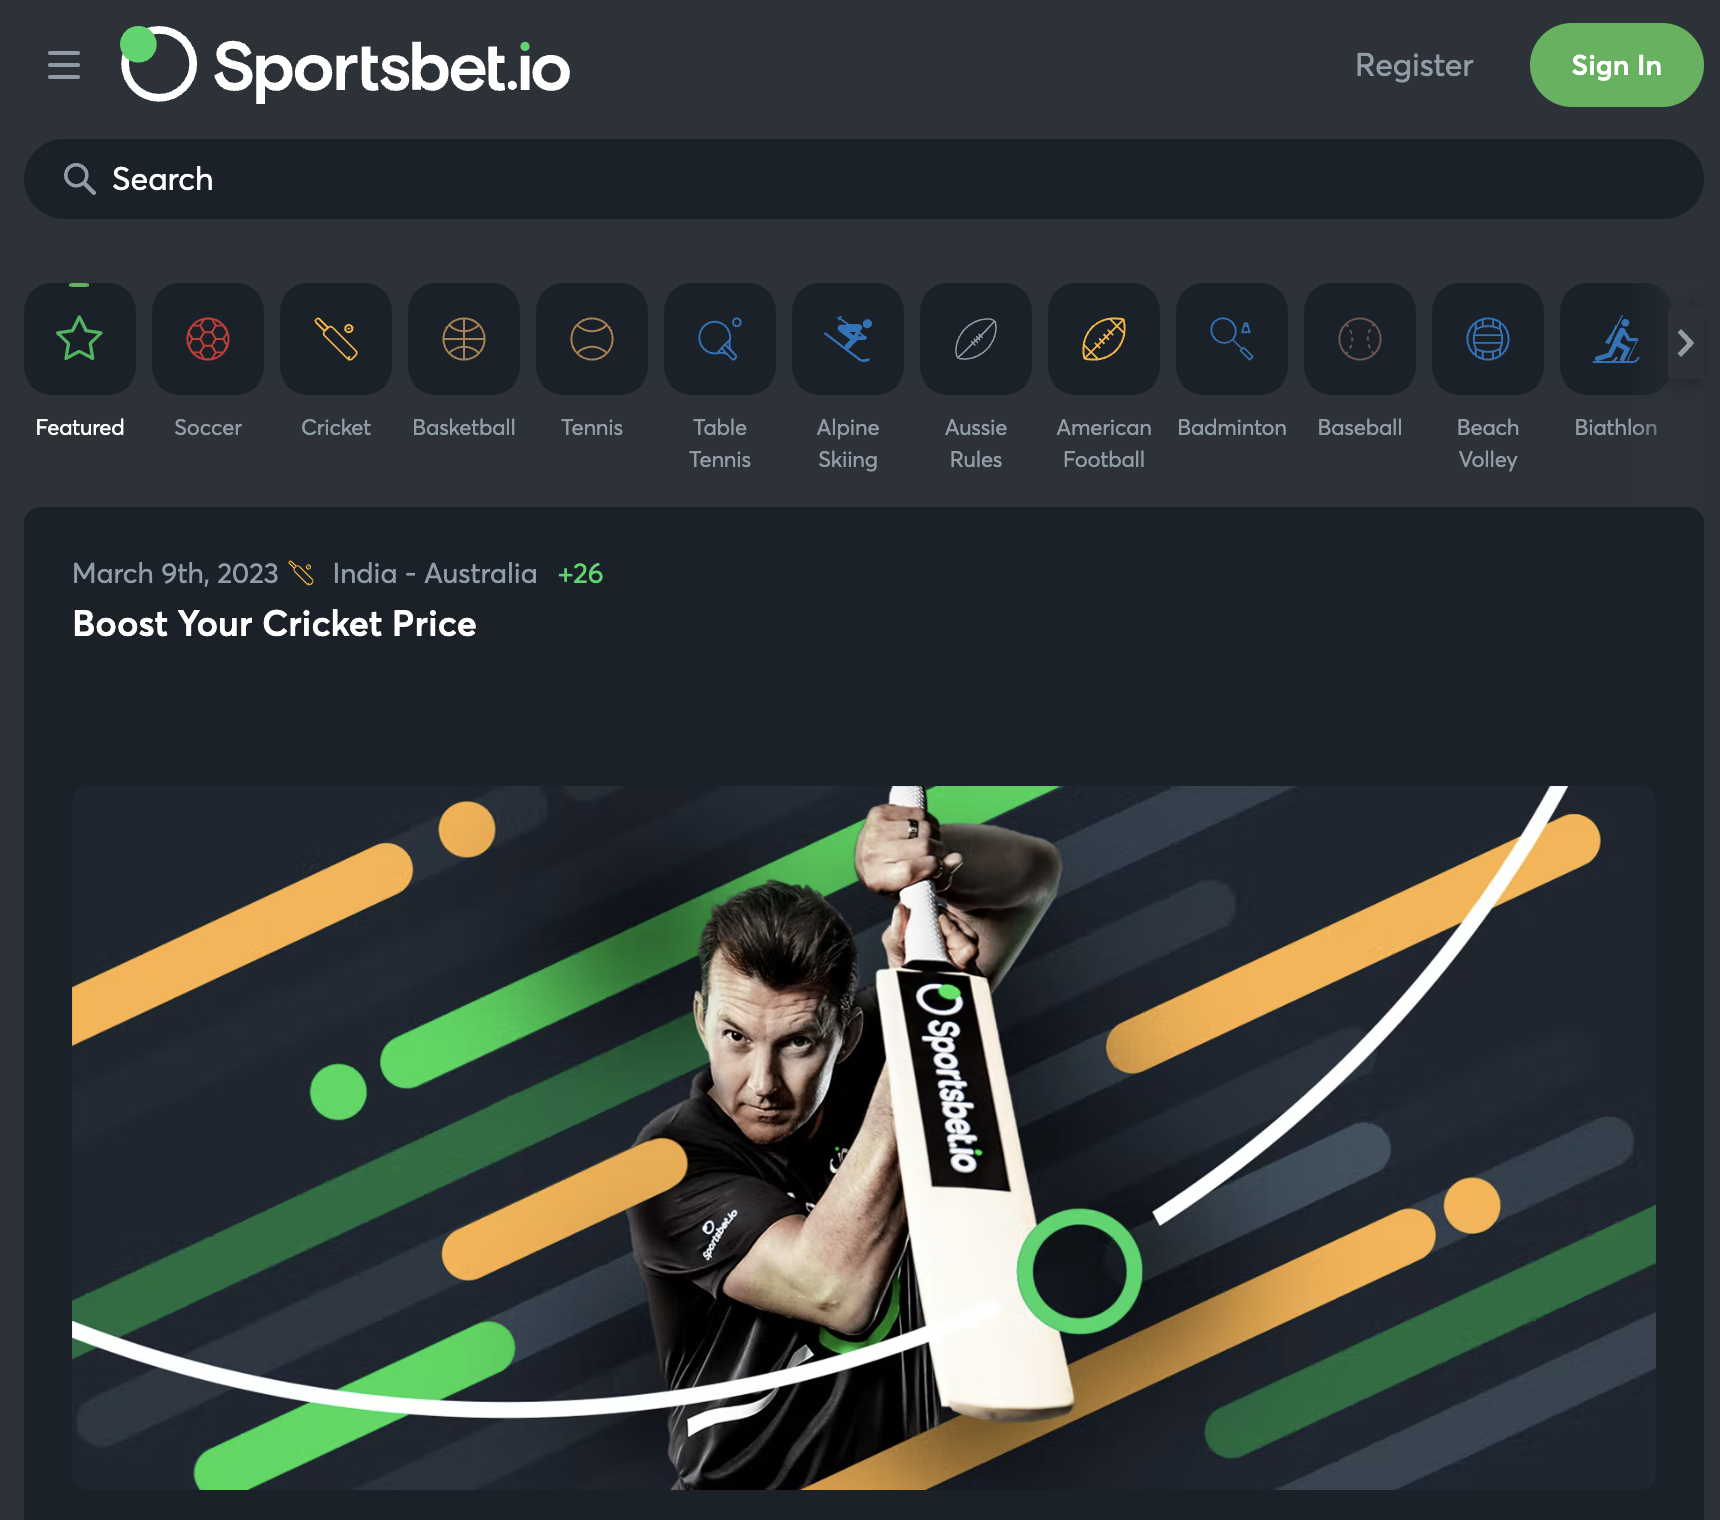 Check out Sportsbet.io